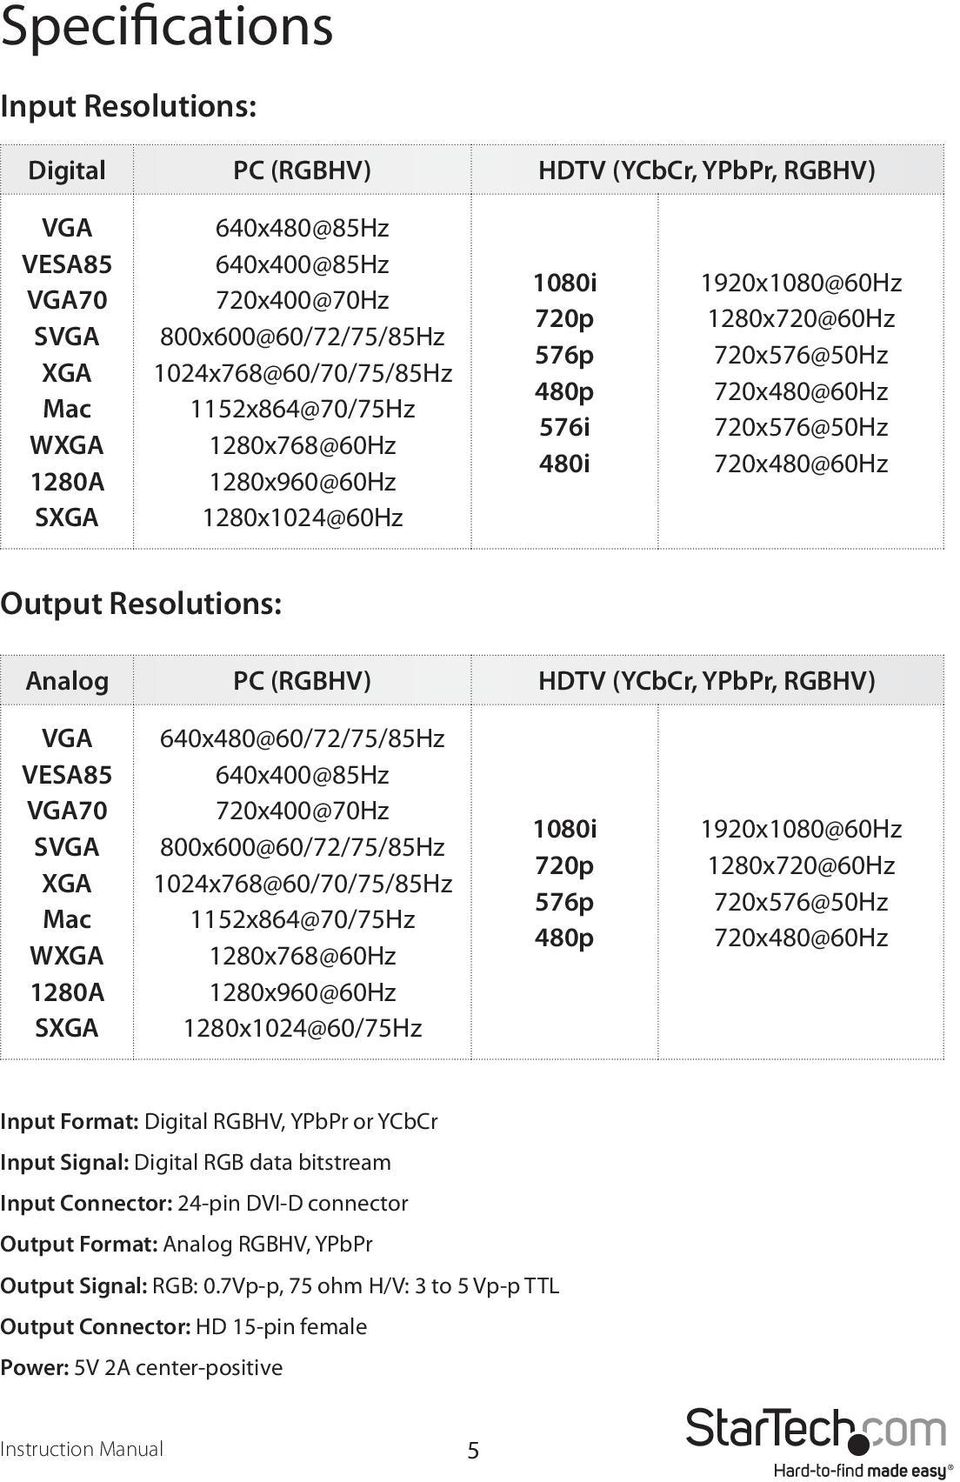 Output Resolutions: Analog PC (RGBHV) HDTV (YCbCr, YPbPr, RGBHV) VGA VESA85 VGA70 SVGA XGA Mac WXGA 1280A SXGA 640x480@60/72/75/85Hz 640x400@85Hz 720x400@70Hz 800x600@60/72/75/85Hz